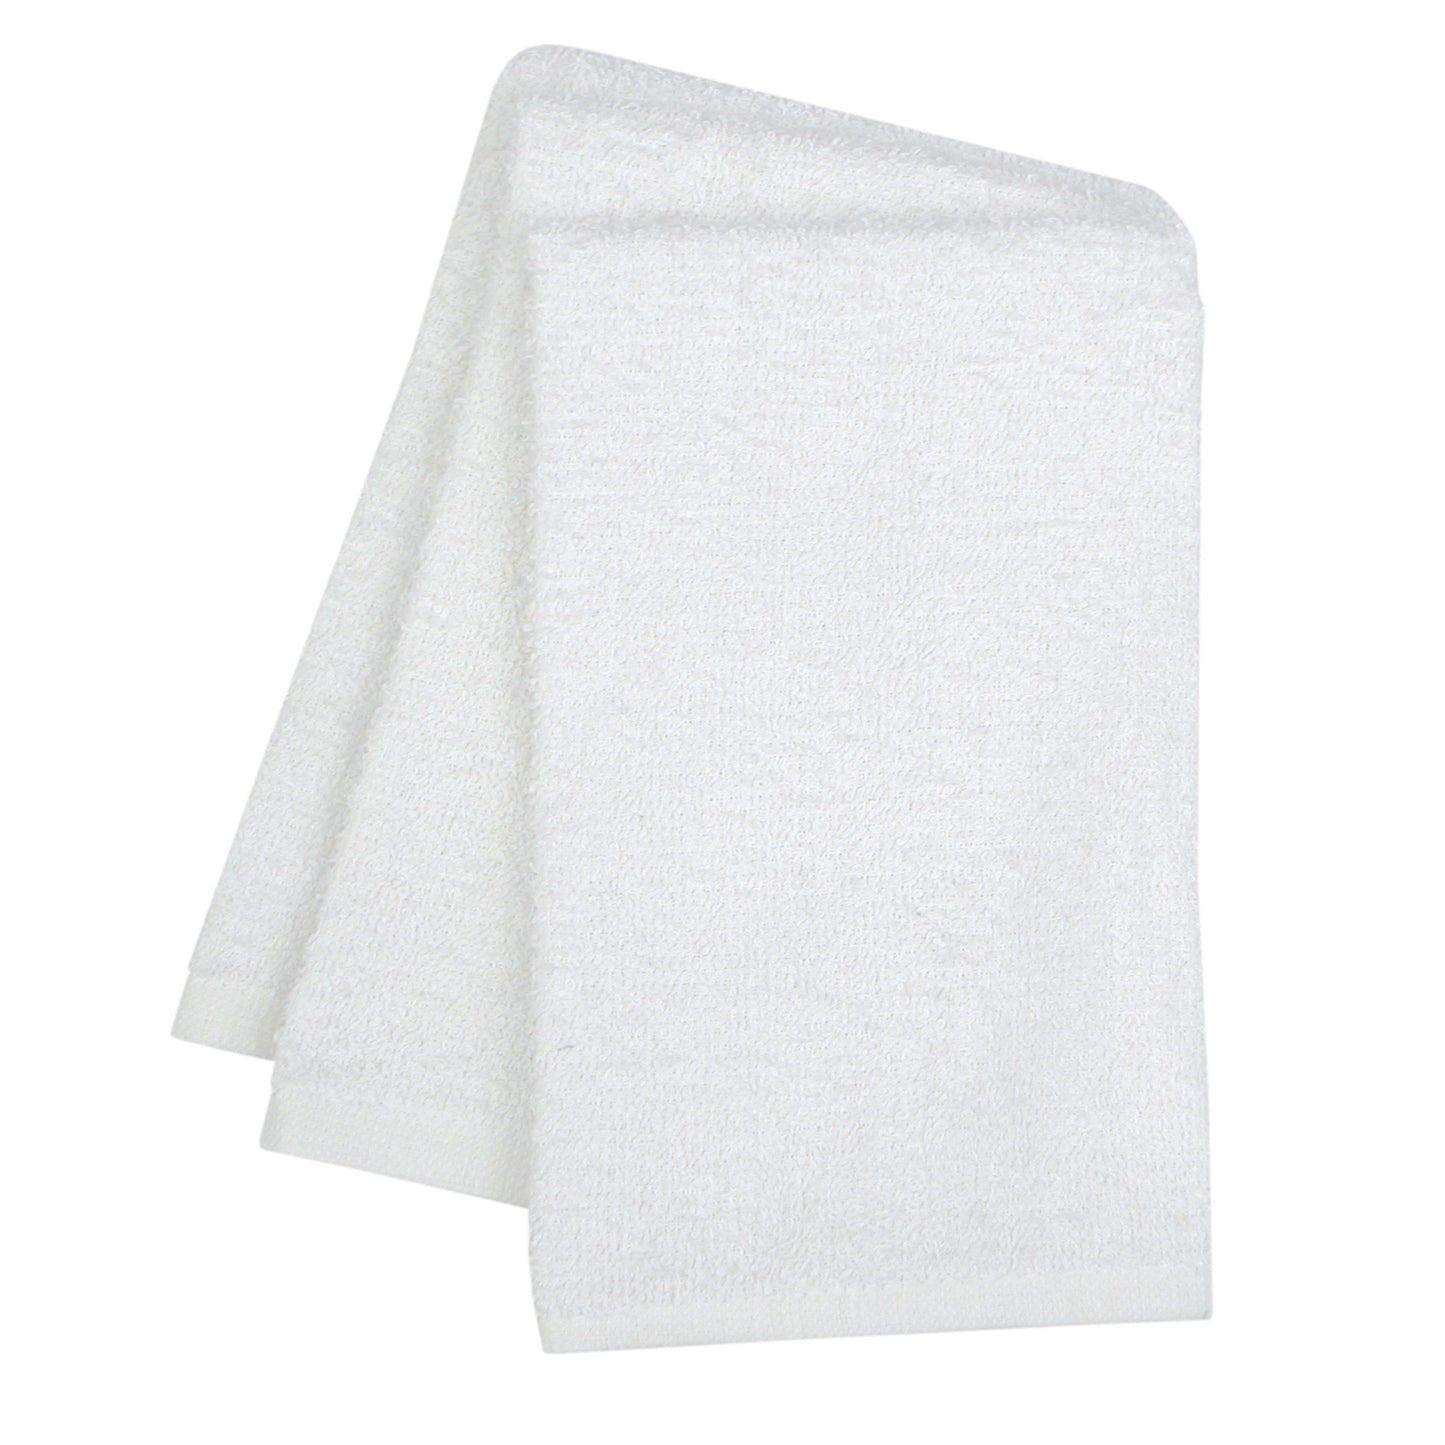 Terry Bar Mop Towel, 16x19 inch, White